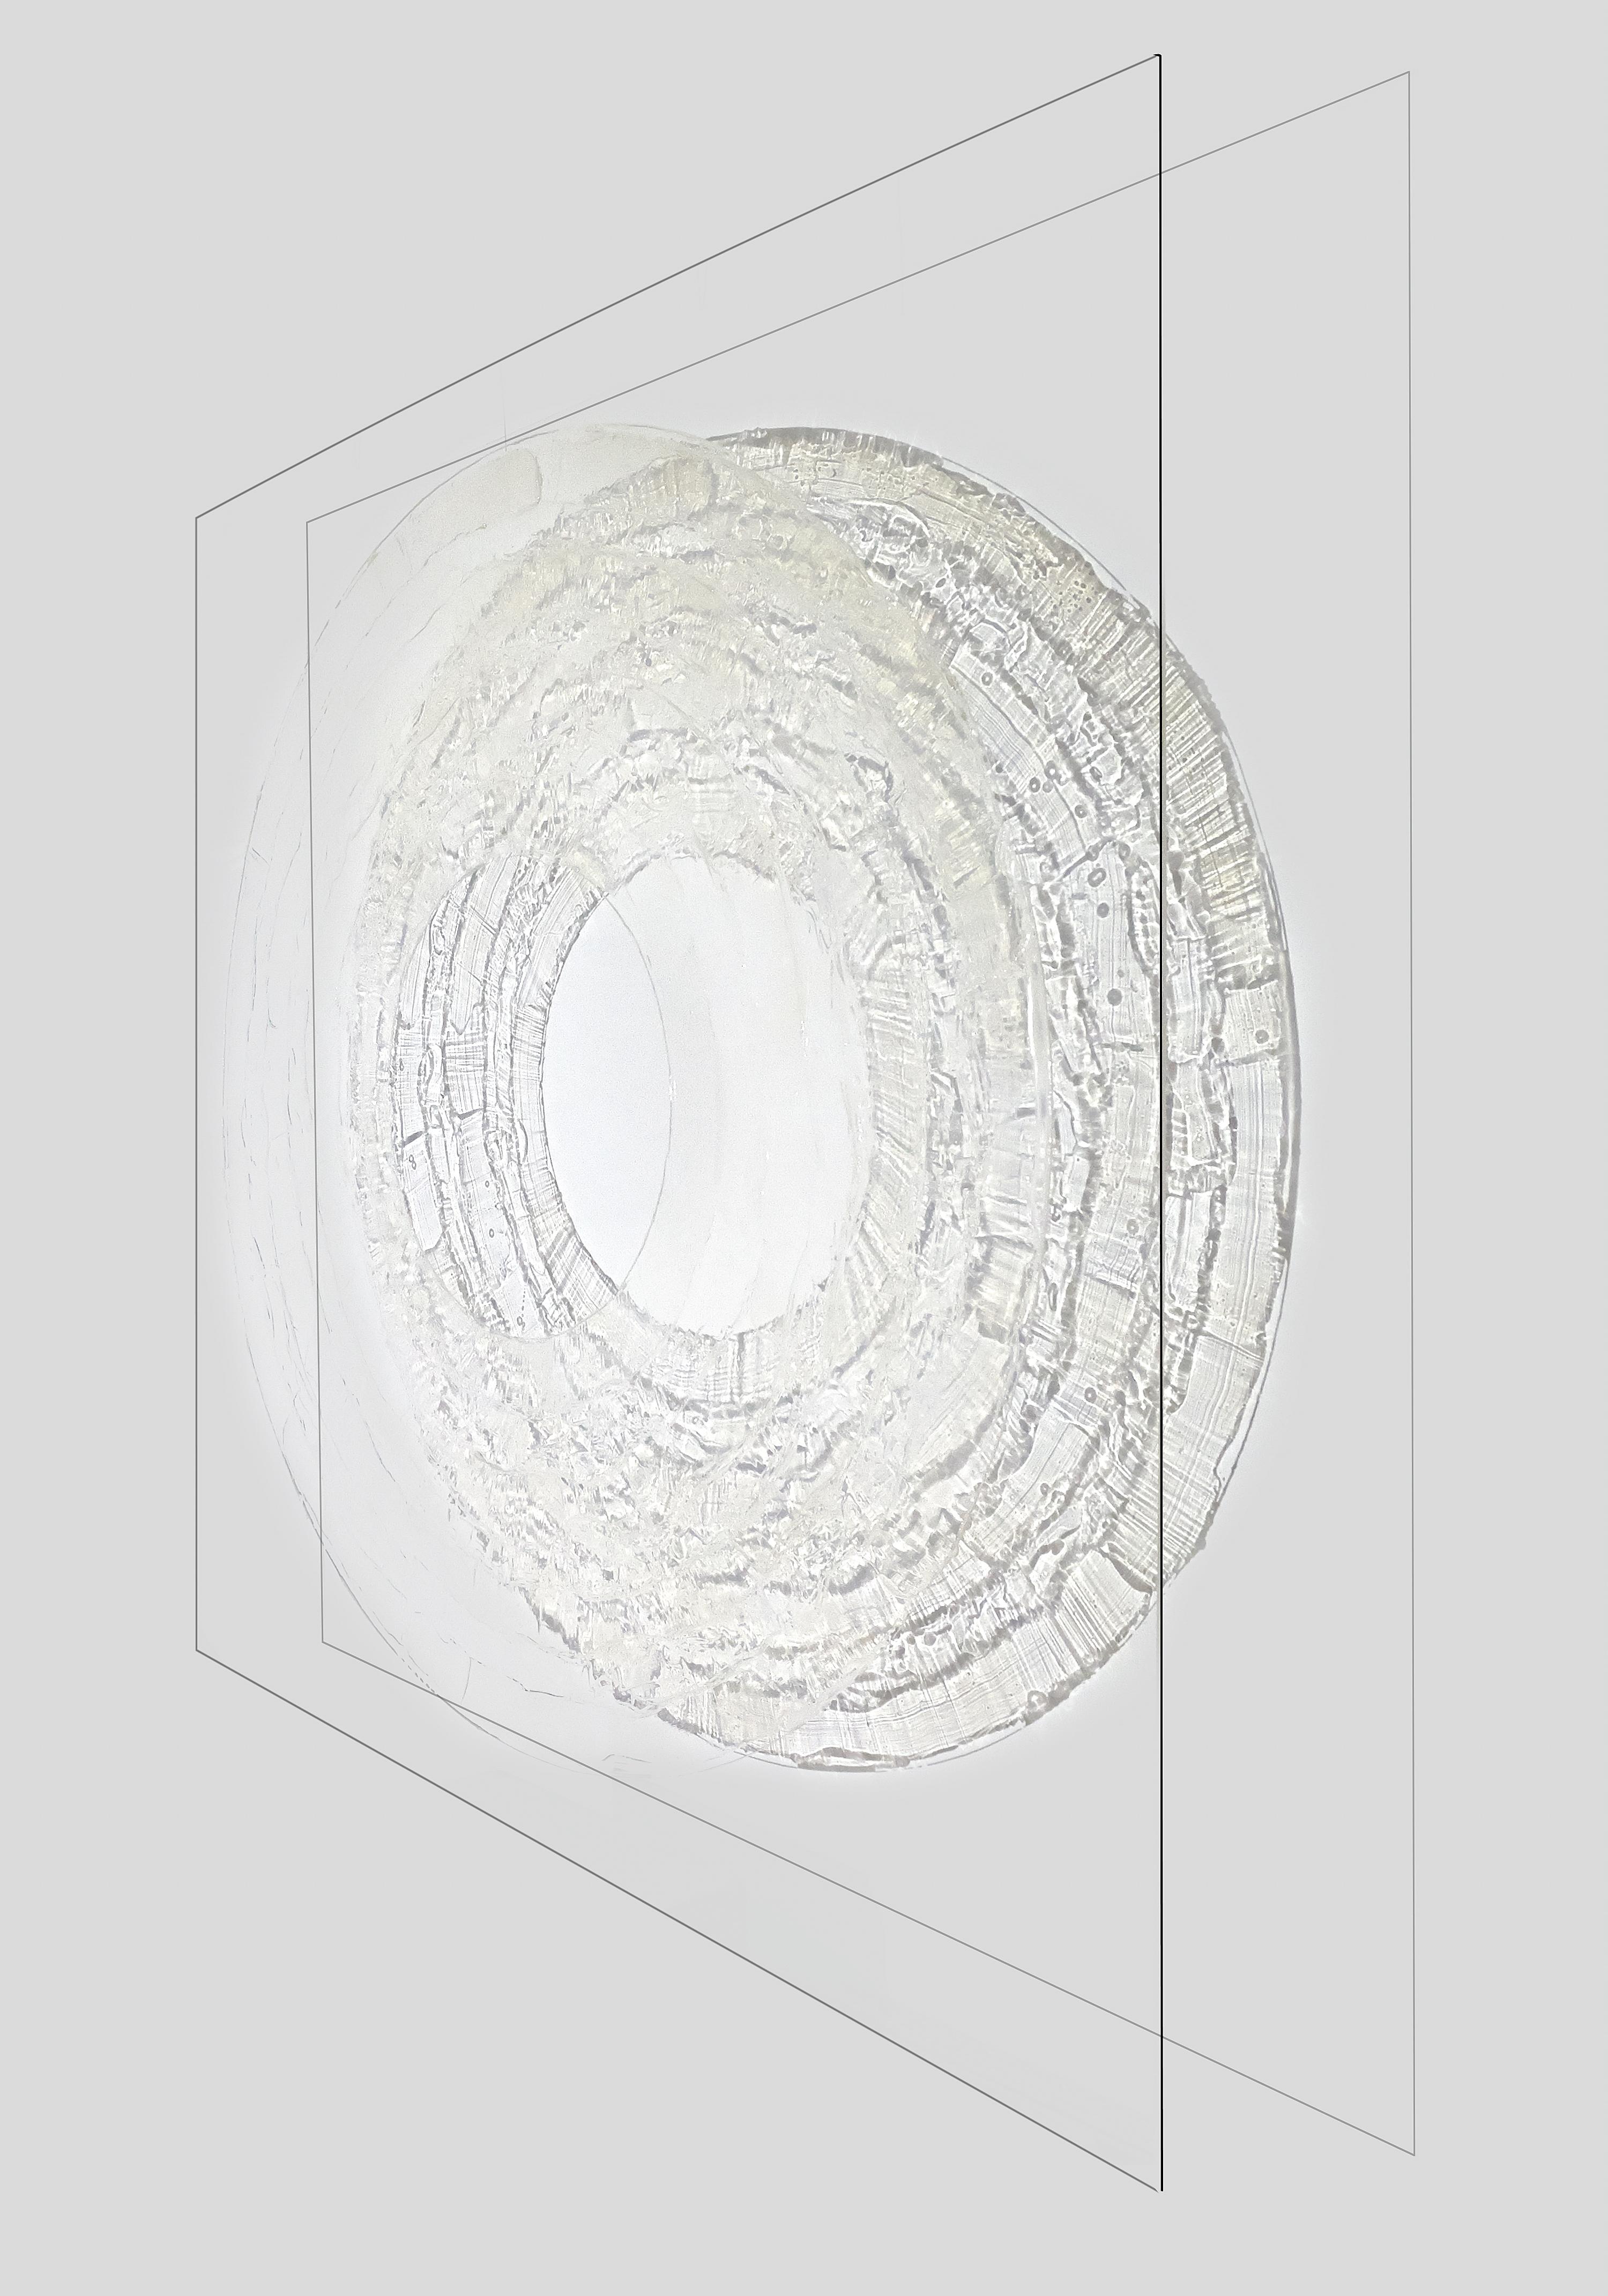 Untitled No 31 - large, transparent, shadow, wall mounted acrylic on plexiglass - Painting by Ania Machudera